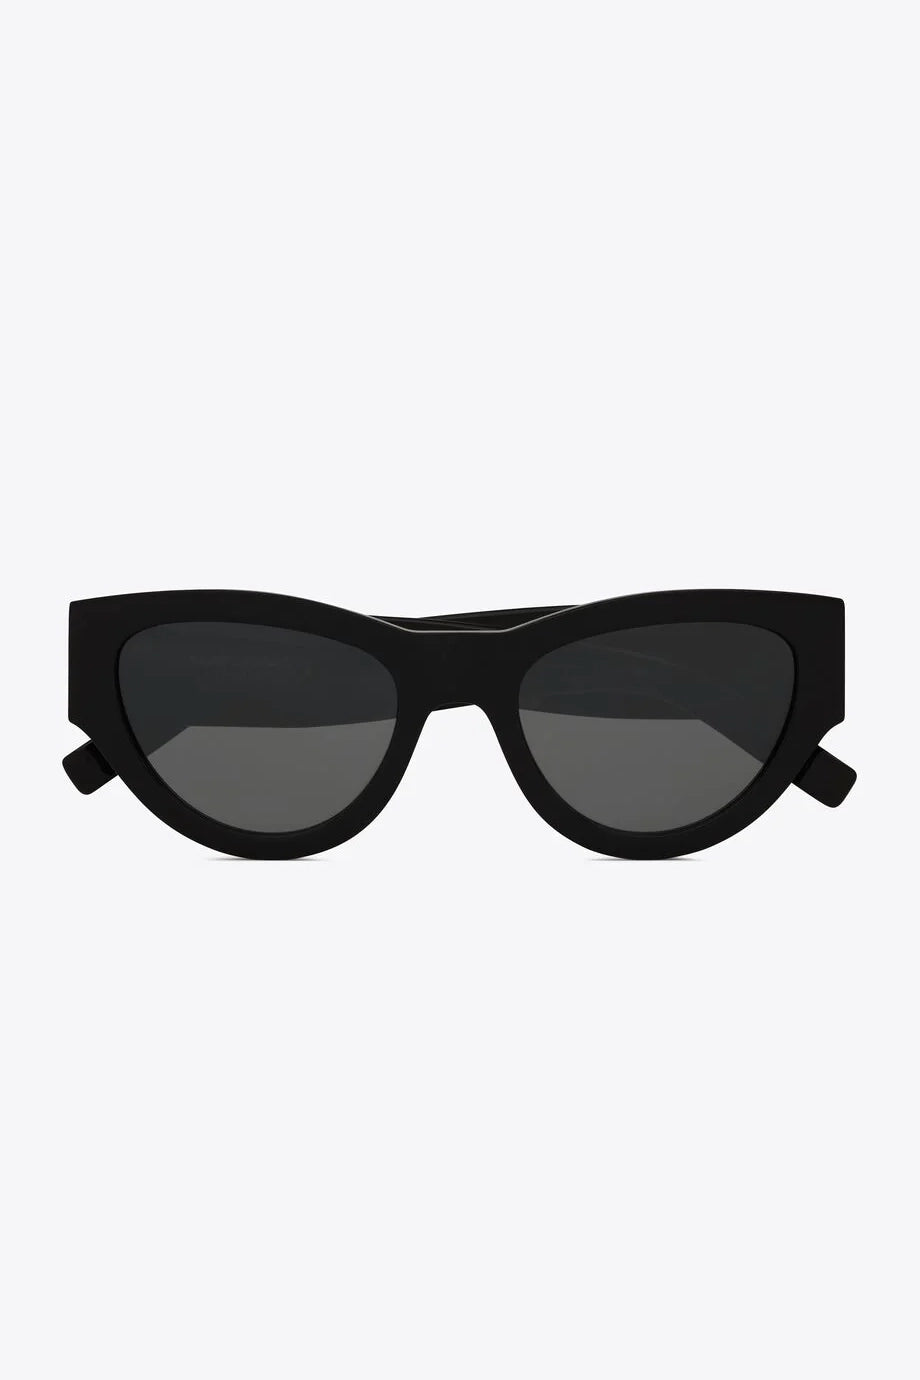 Saint Laurent Cat-eye Black Sunglasses SL M94